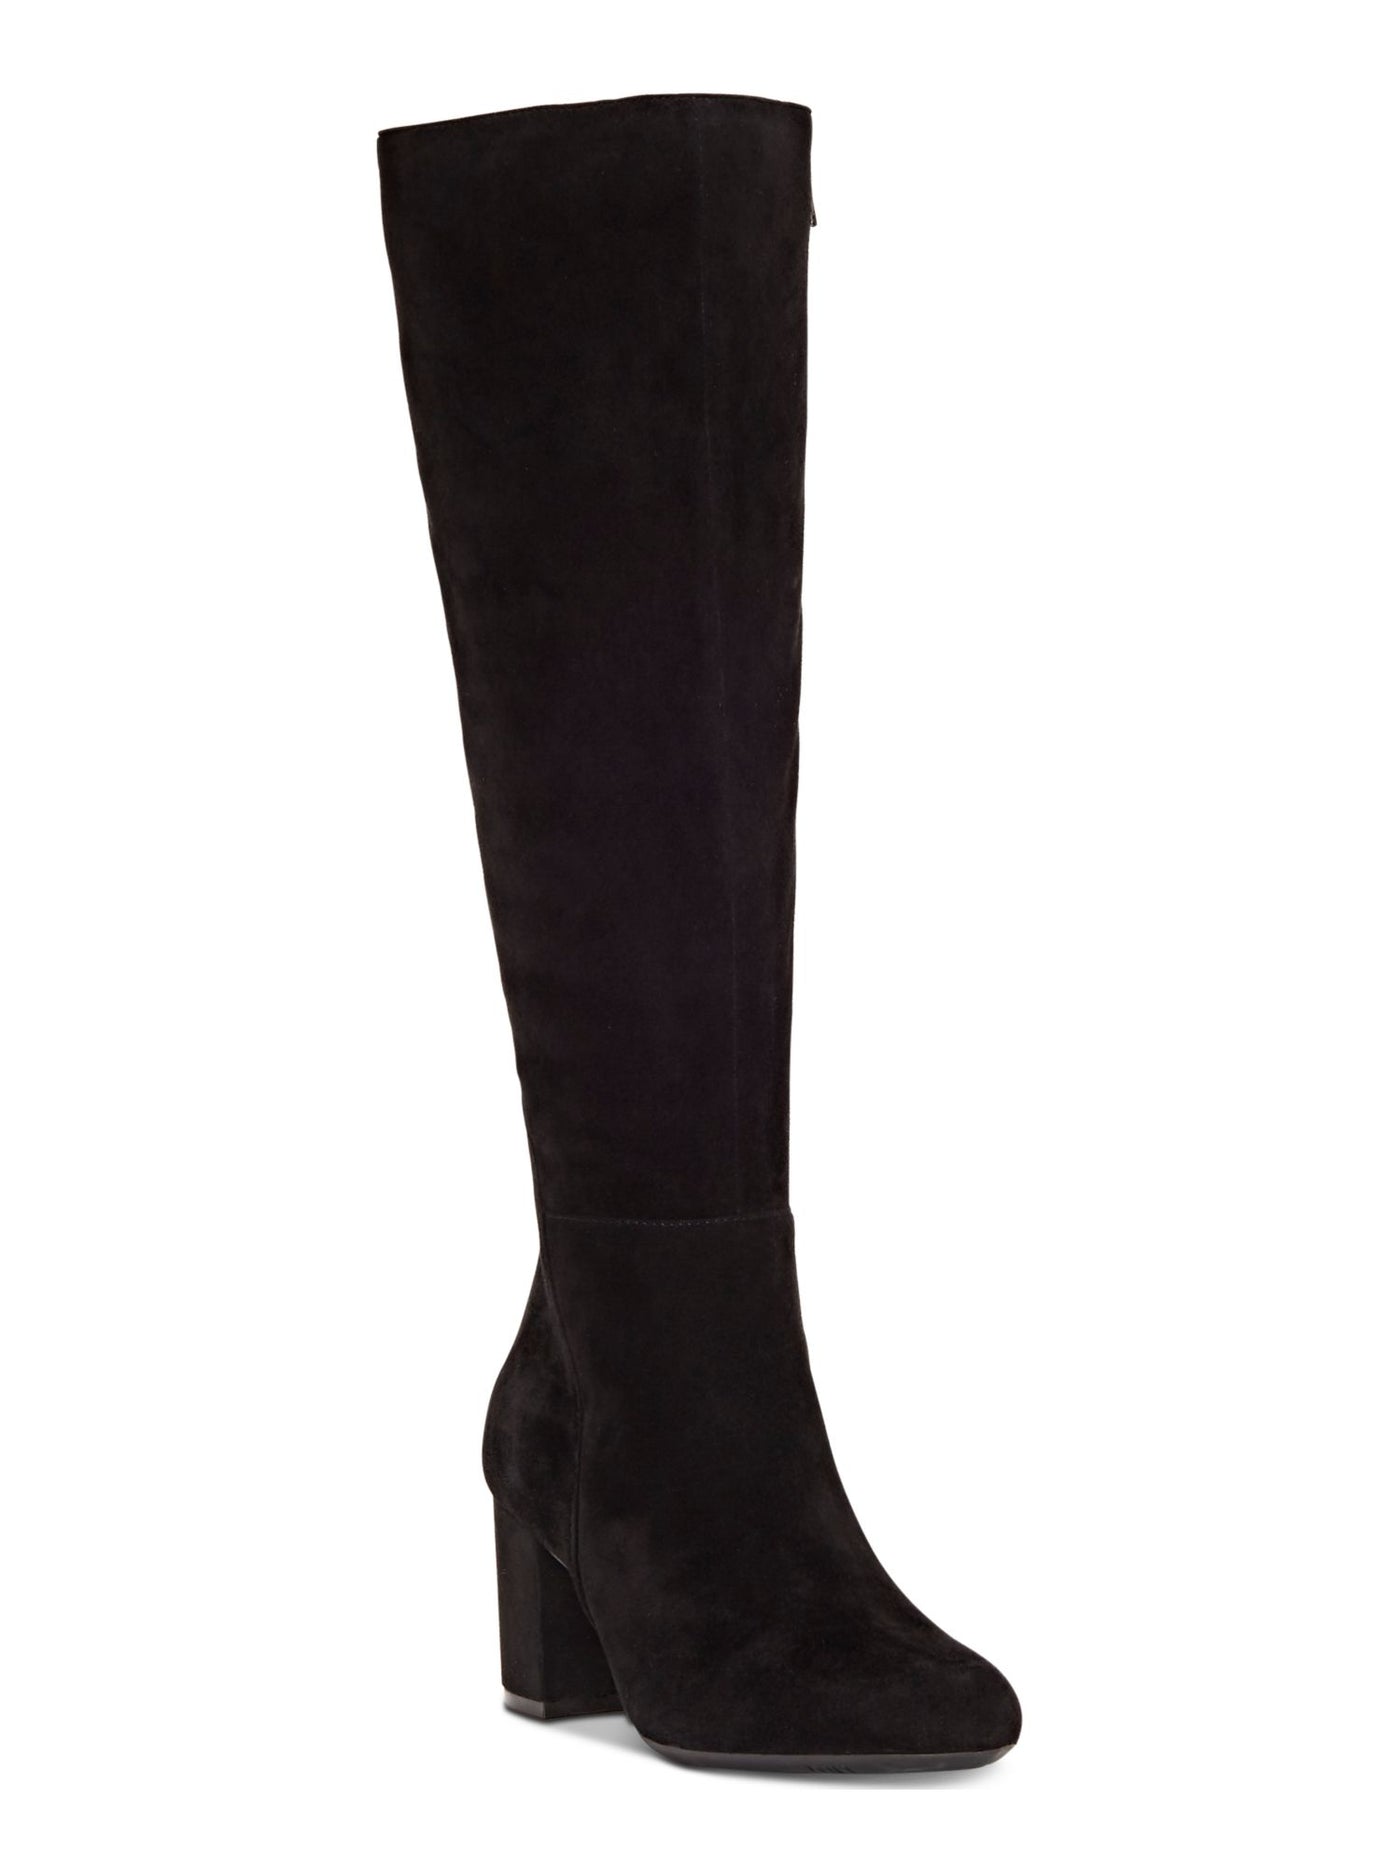 INC Womens Black Block Heel Zip-Up Dress Boots Shoes 5.5 M